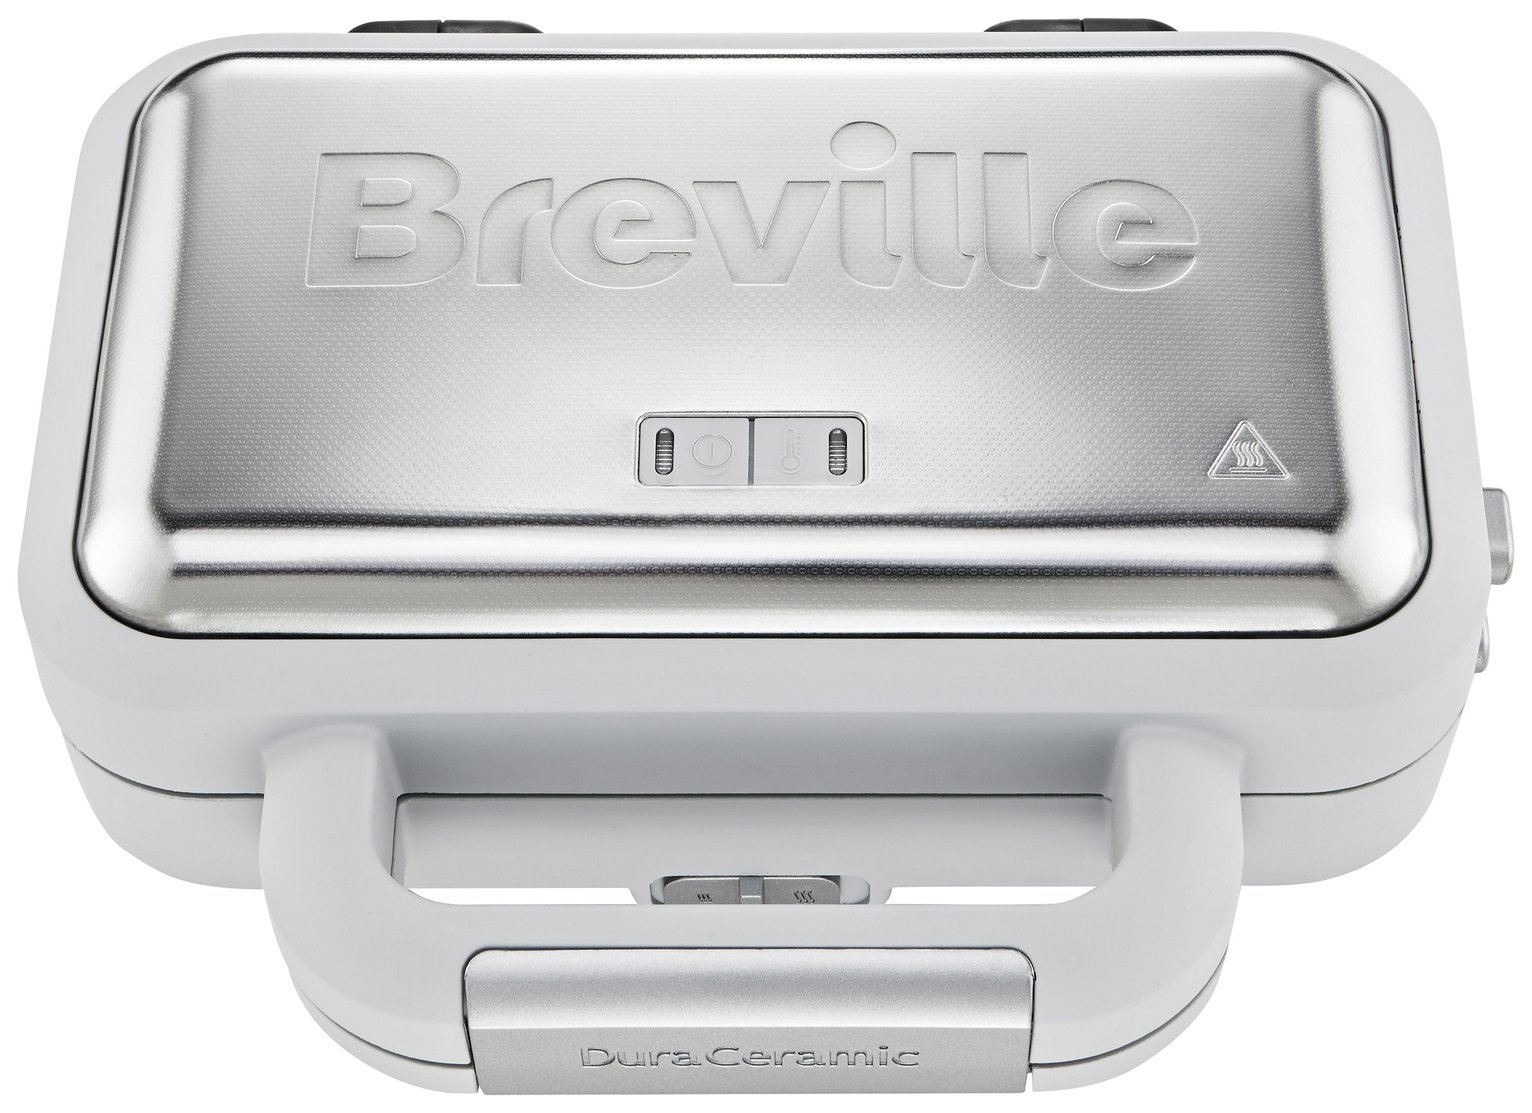 Breville VST070 Deep Fill Sandwich Toaster - Stainless Steel